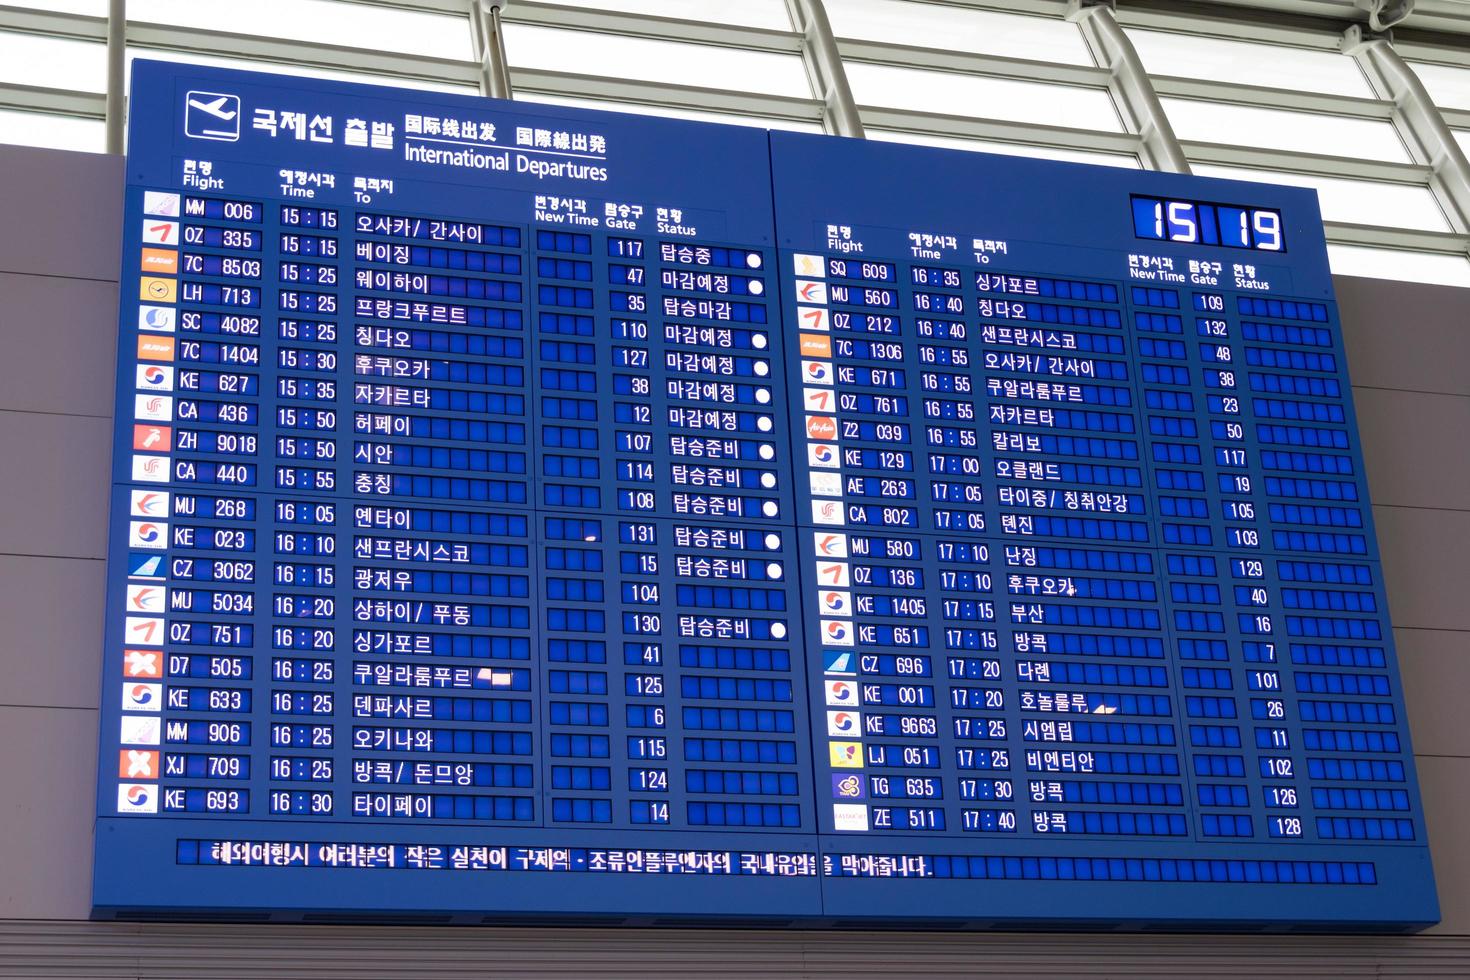 seoul, corea, gennaio 06,2016 - bordo degli arrivi dei voli foto